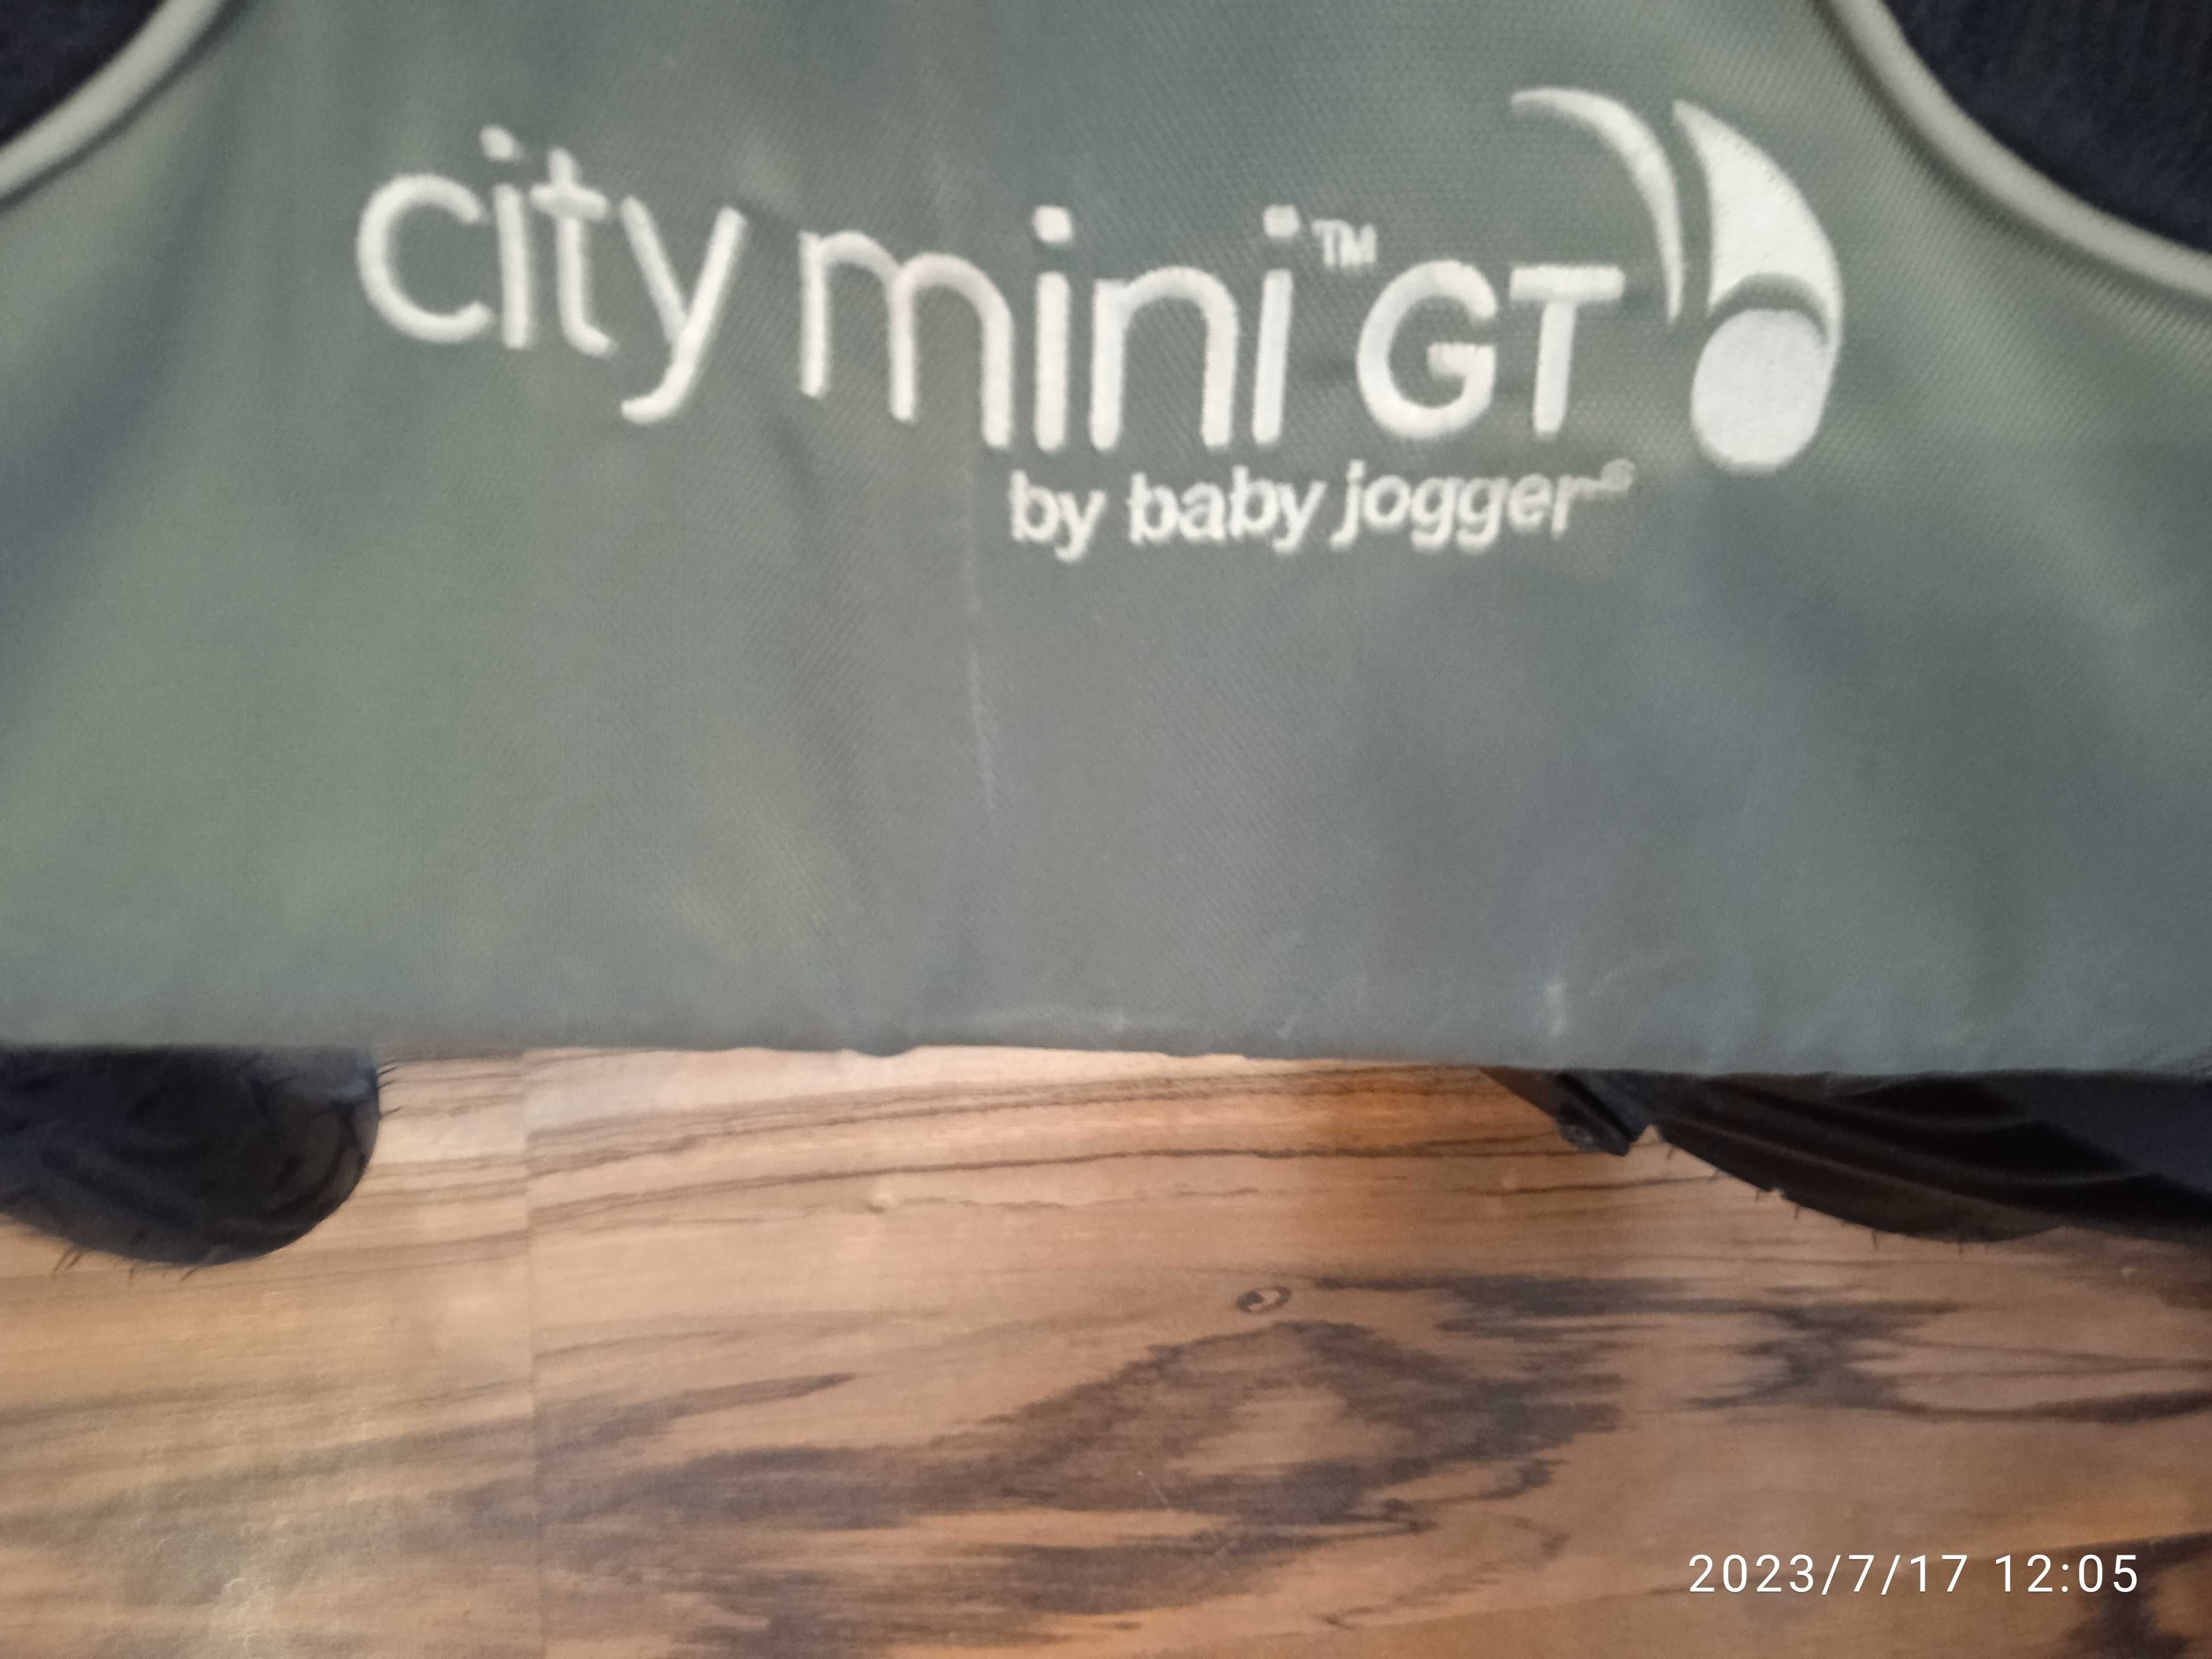 Baby jogger city mini GT double